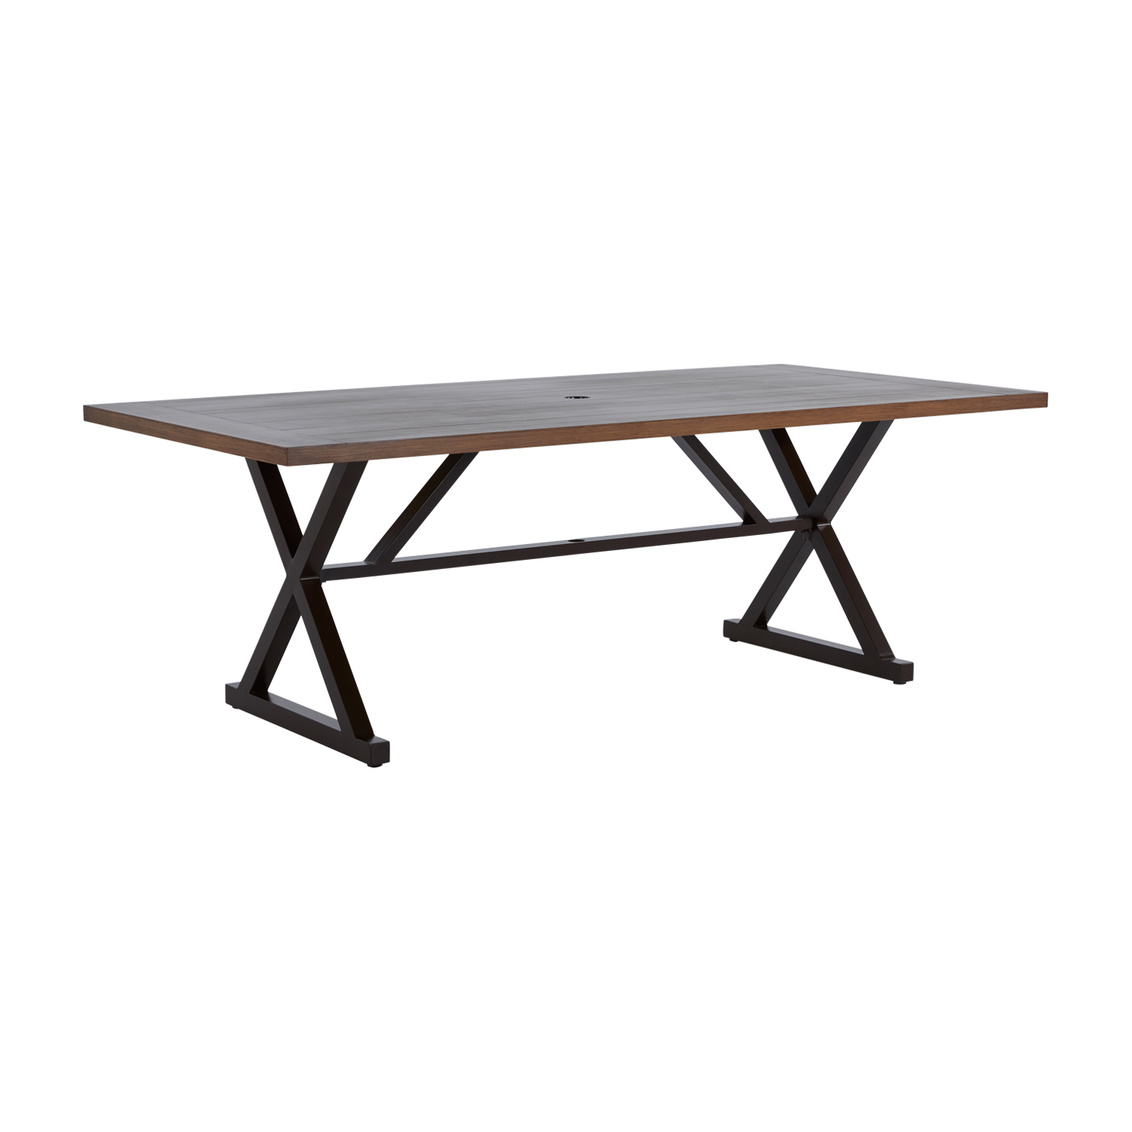 cahaba rectangular dining table in mahogany base / natural top (w/ hole) product image